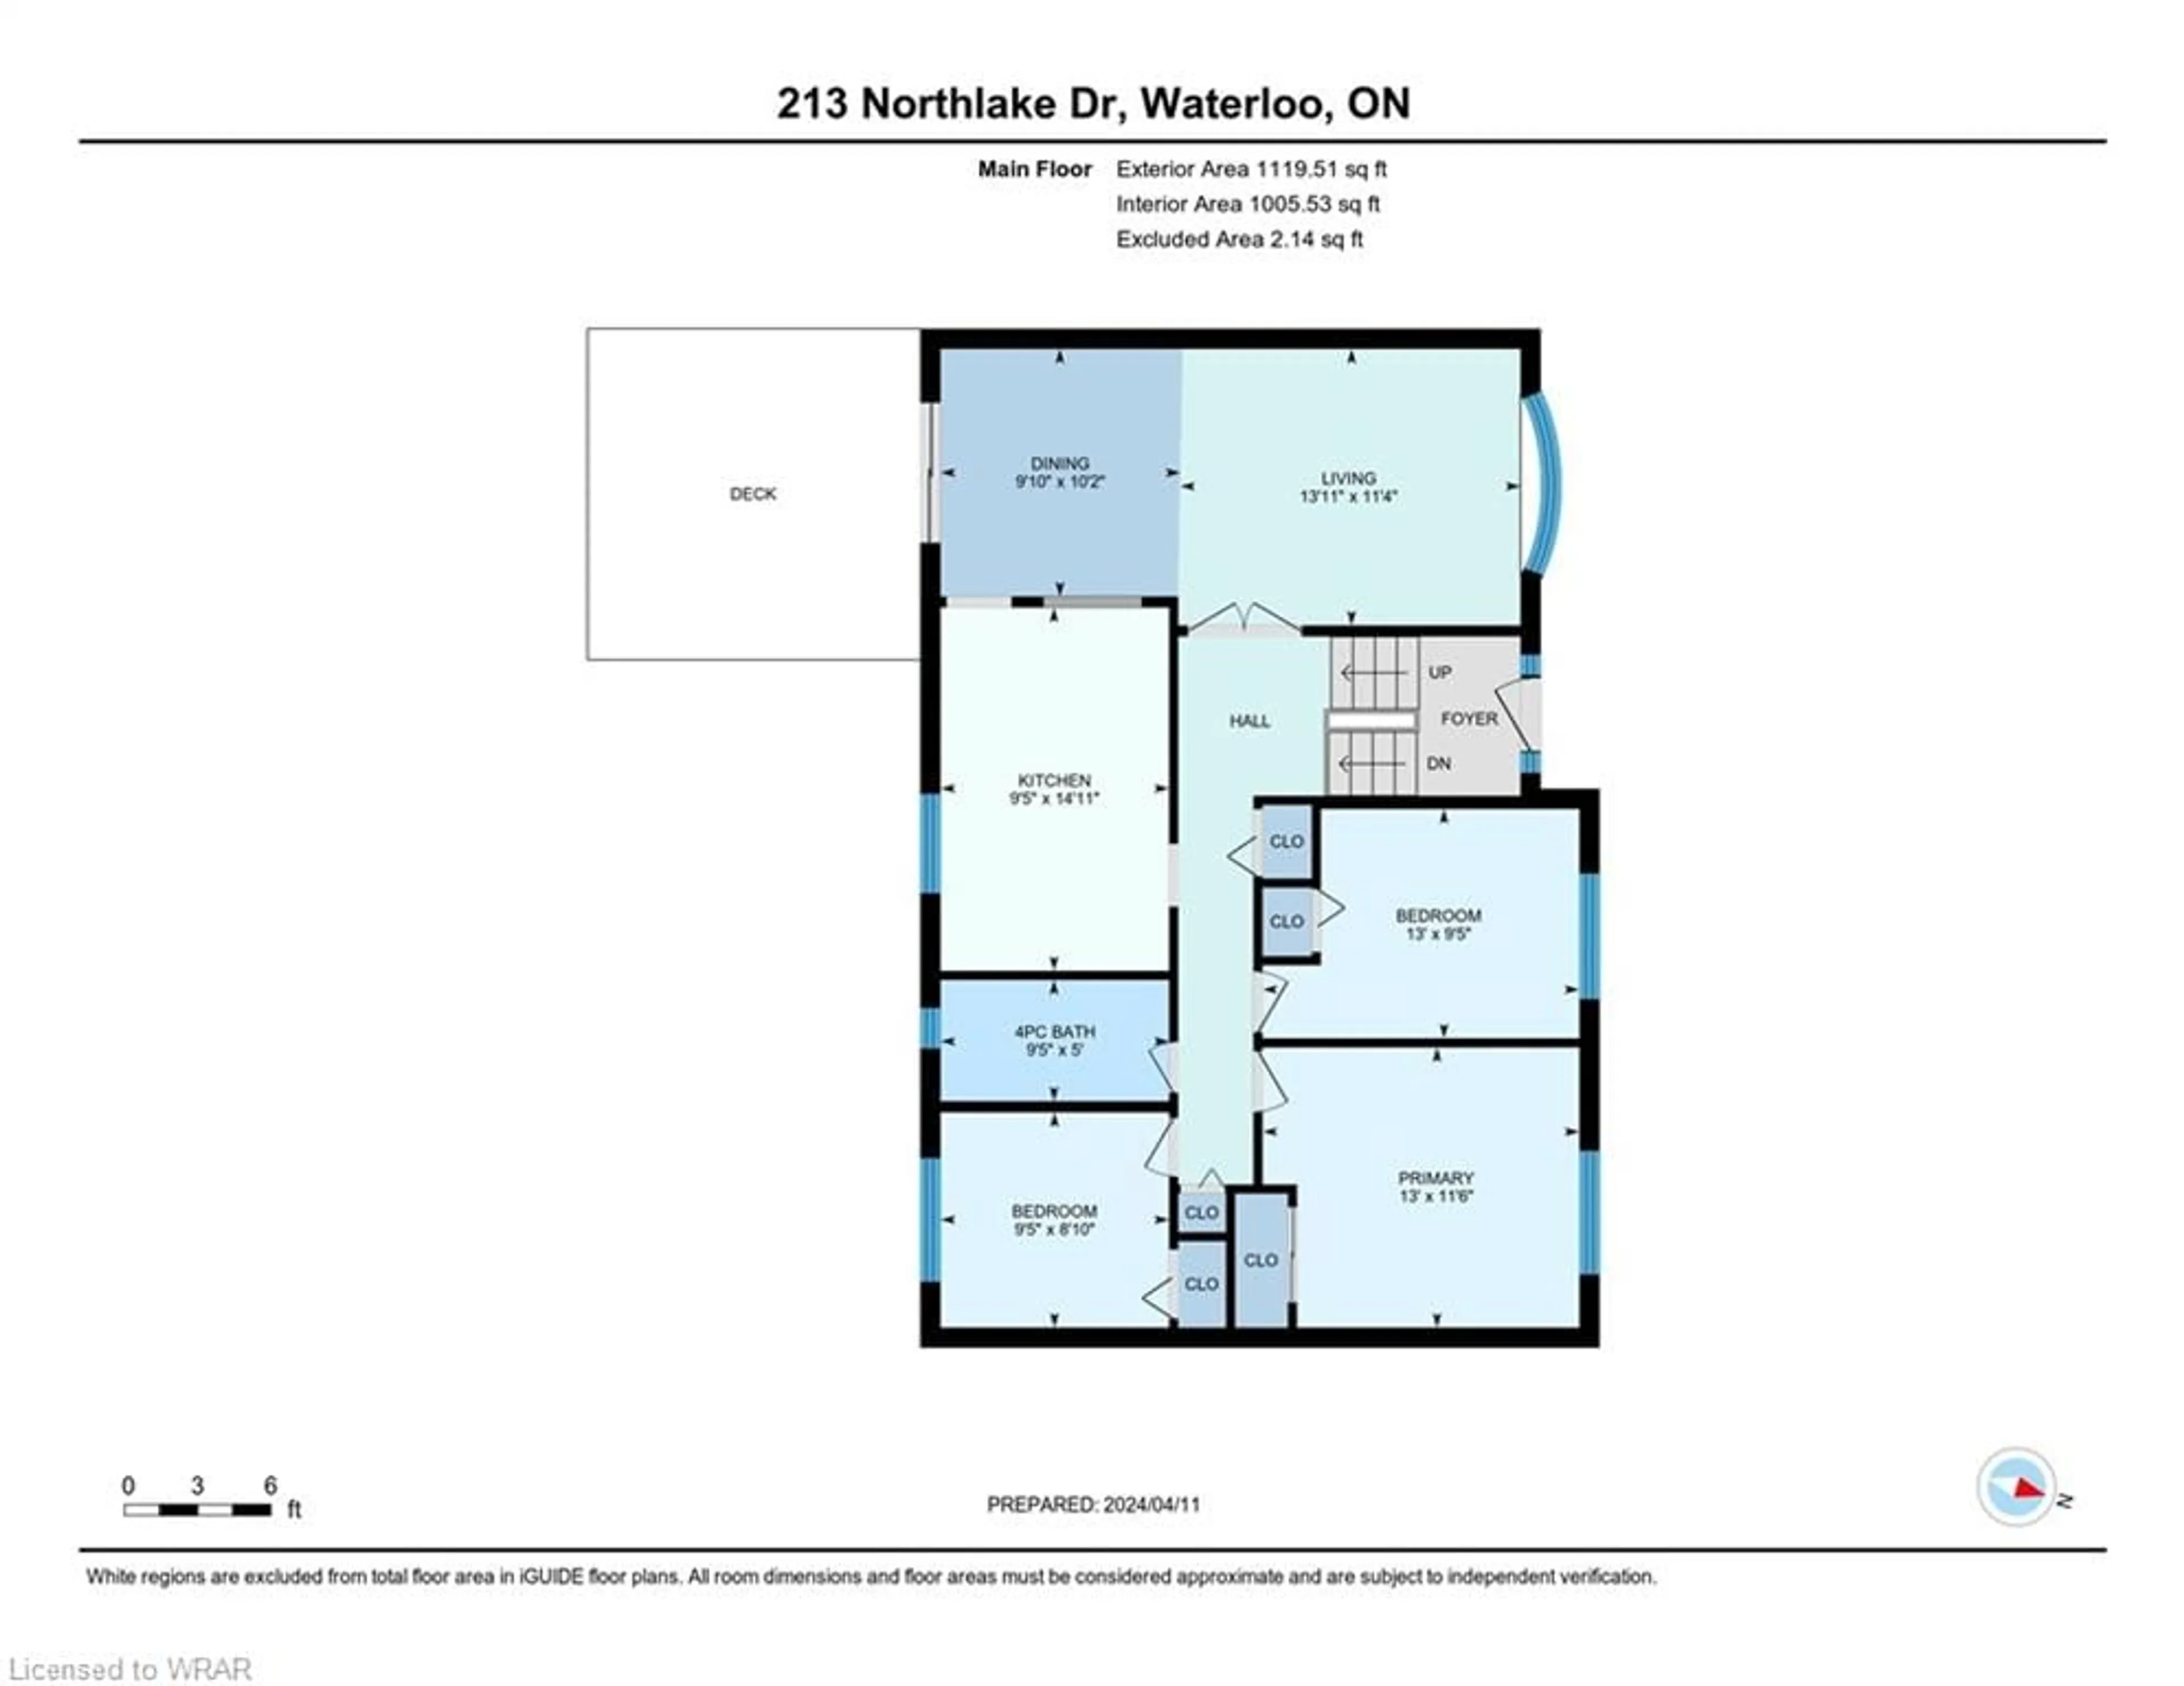 Floor plan for 213 Northlake Dr, Waterloo Ontario N2V 1A6